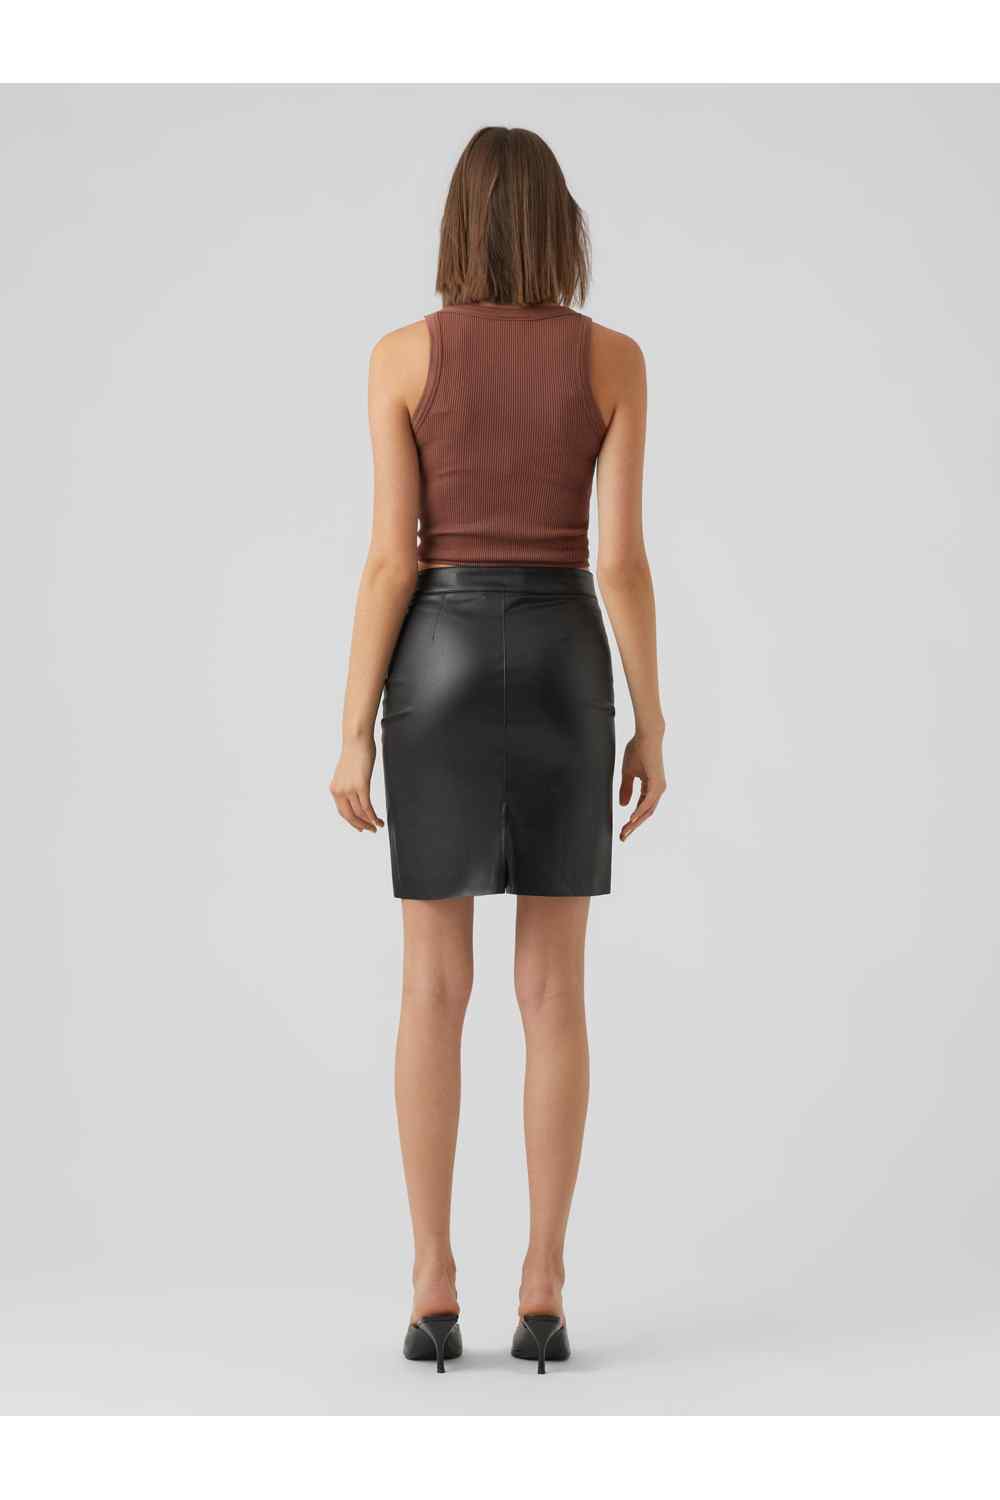 Vero Moda Olympia Skirt - Black 4 Shaws Department Stores